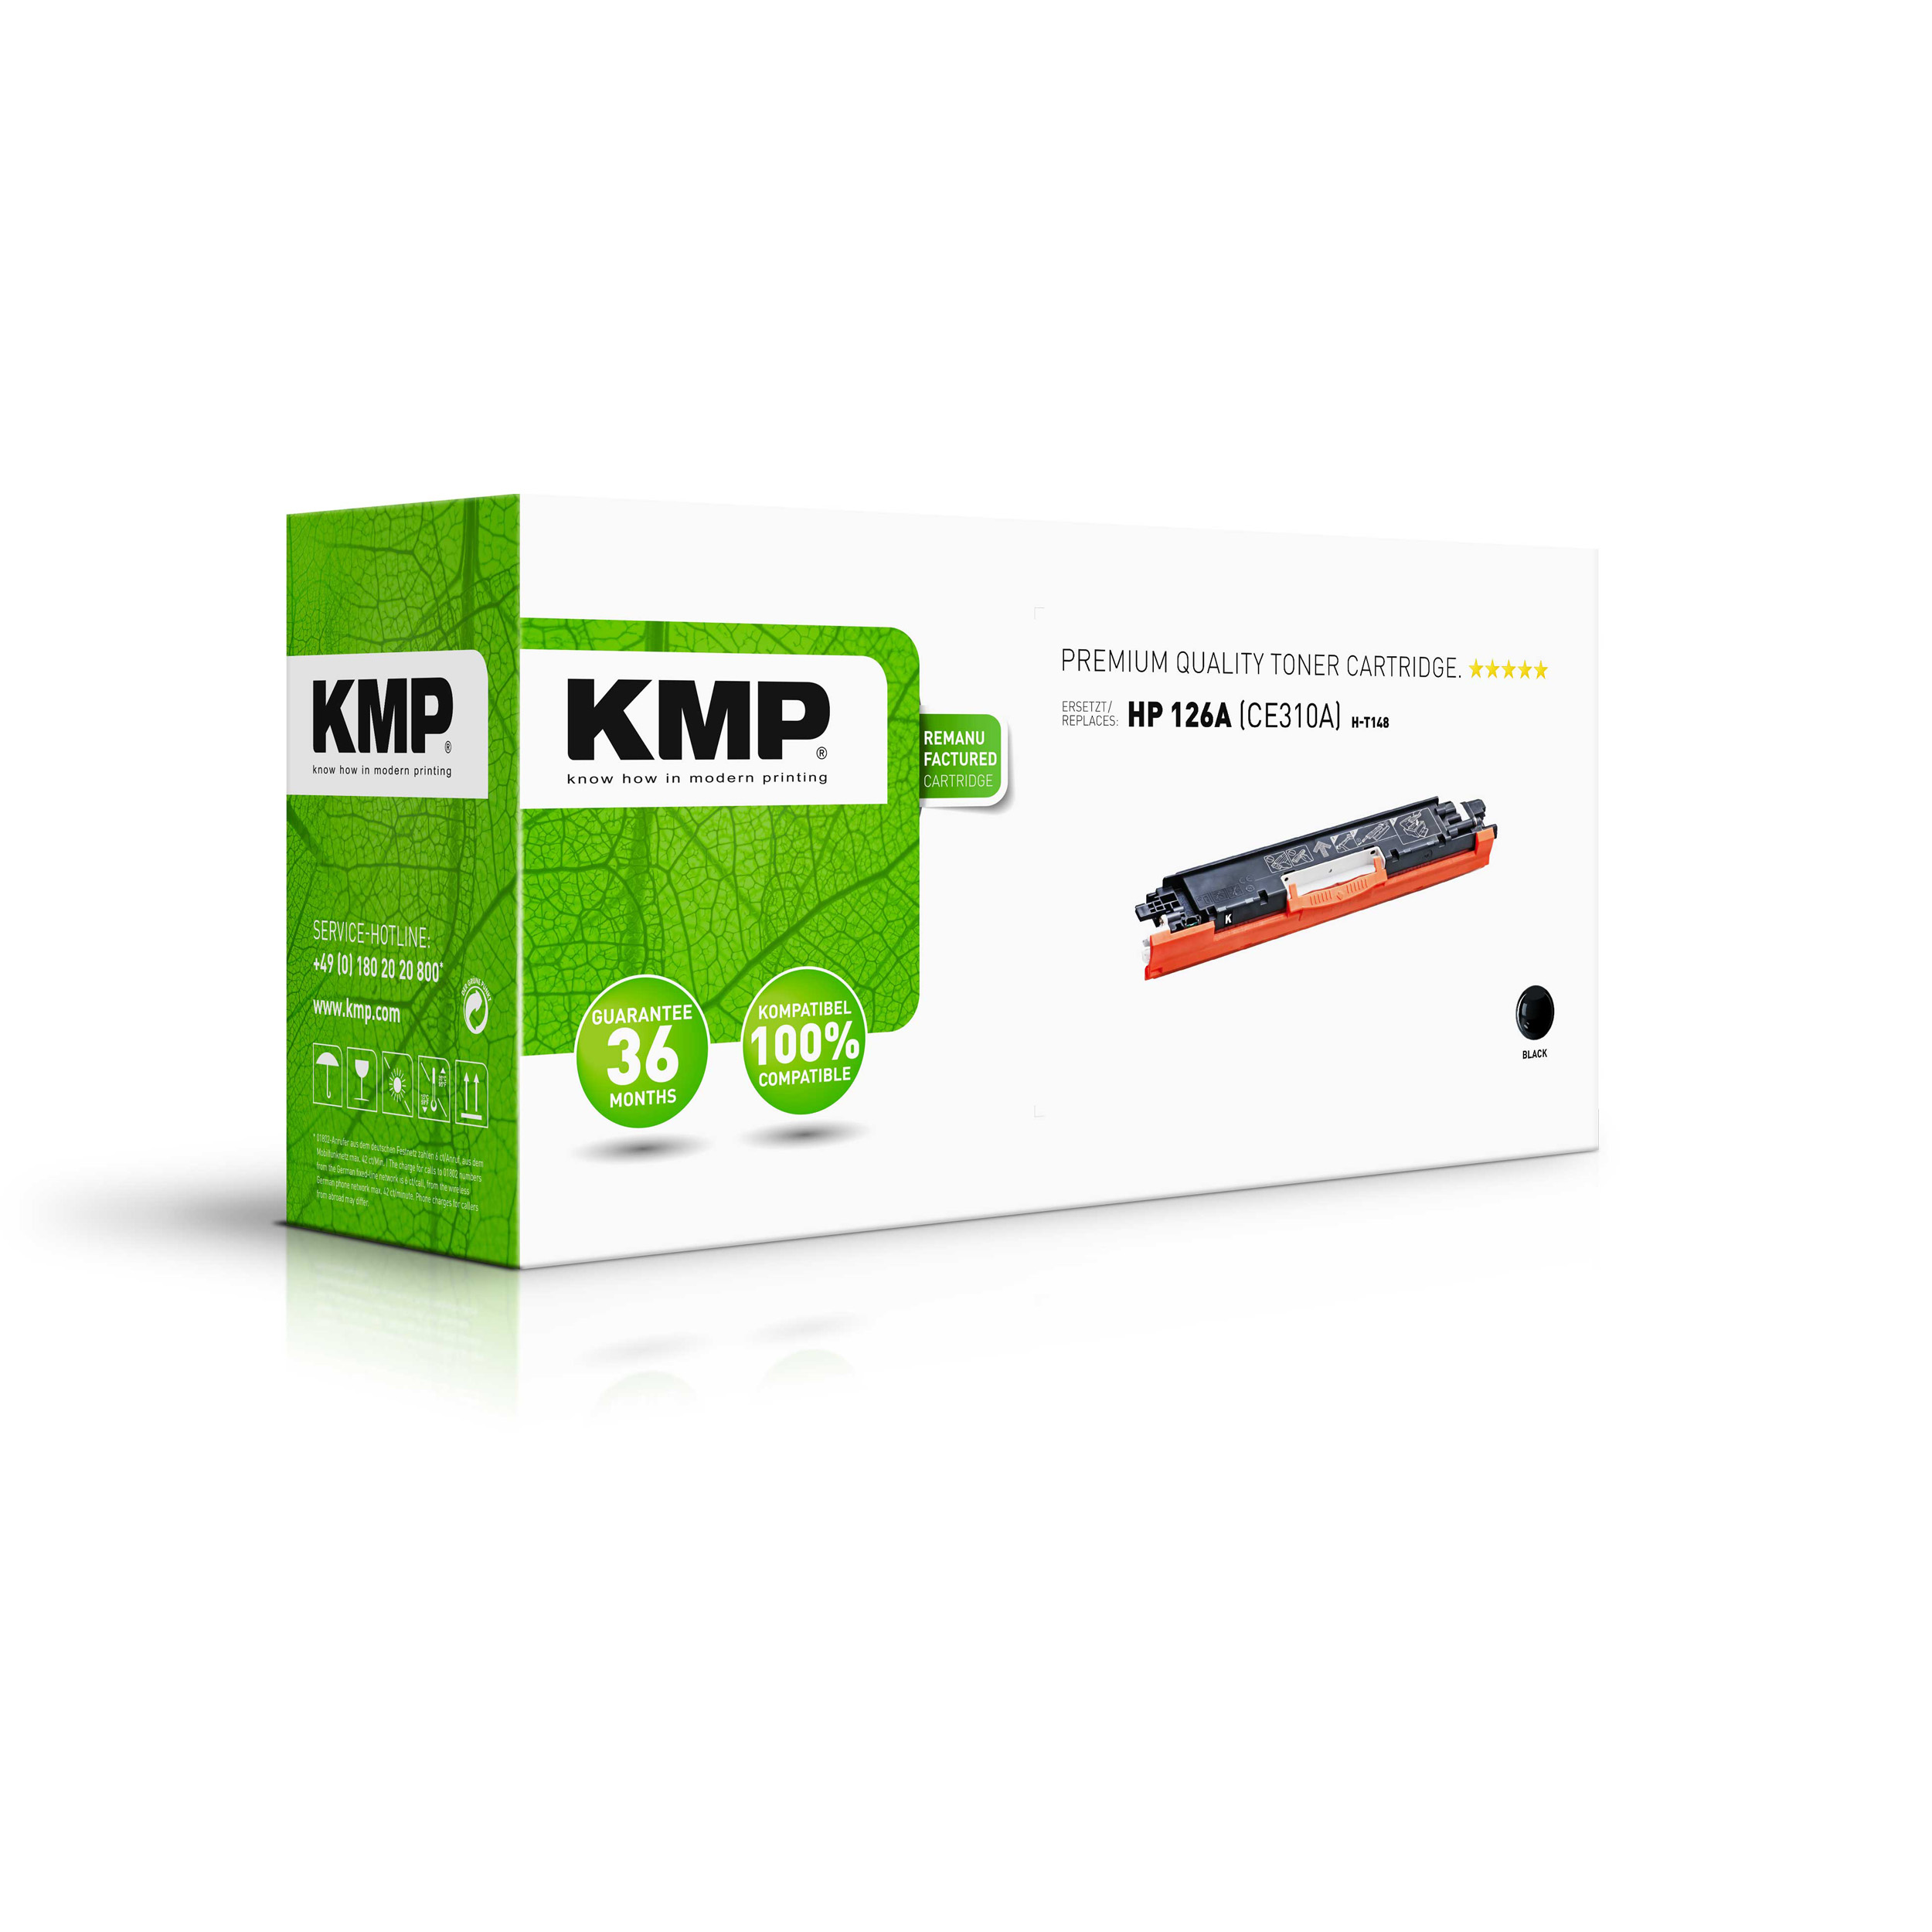 KMP Toner für HP Black Toner (CE310A) (CE310A) 126A schwarz